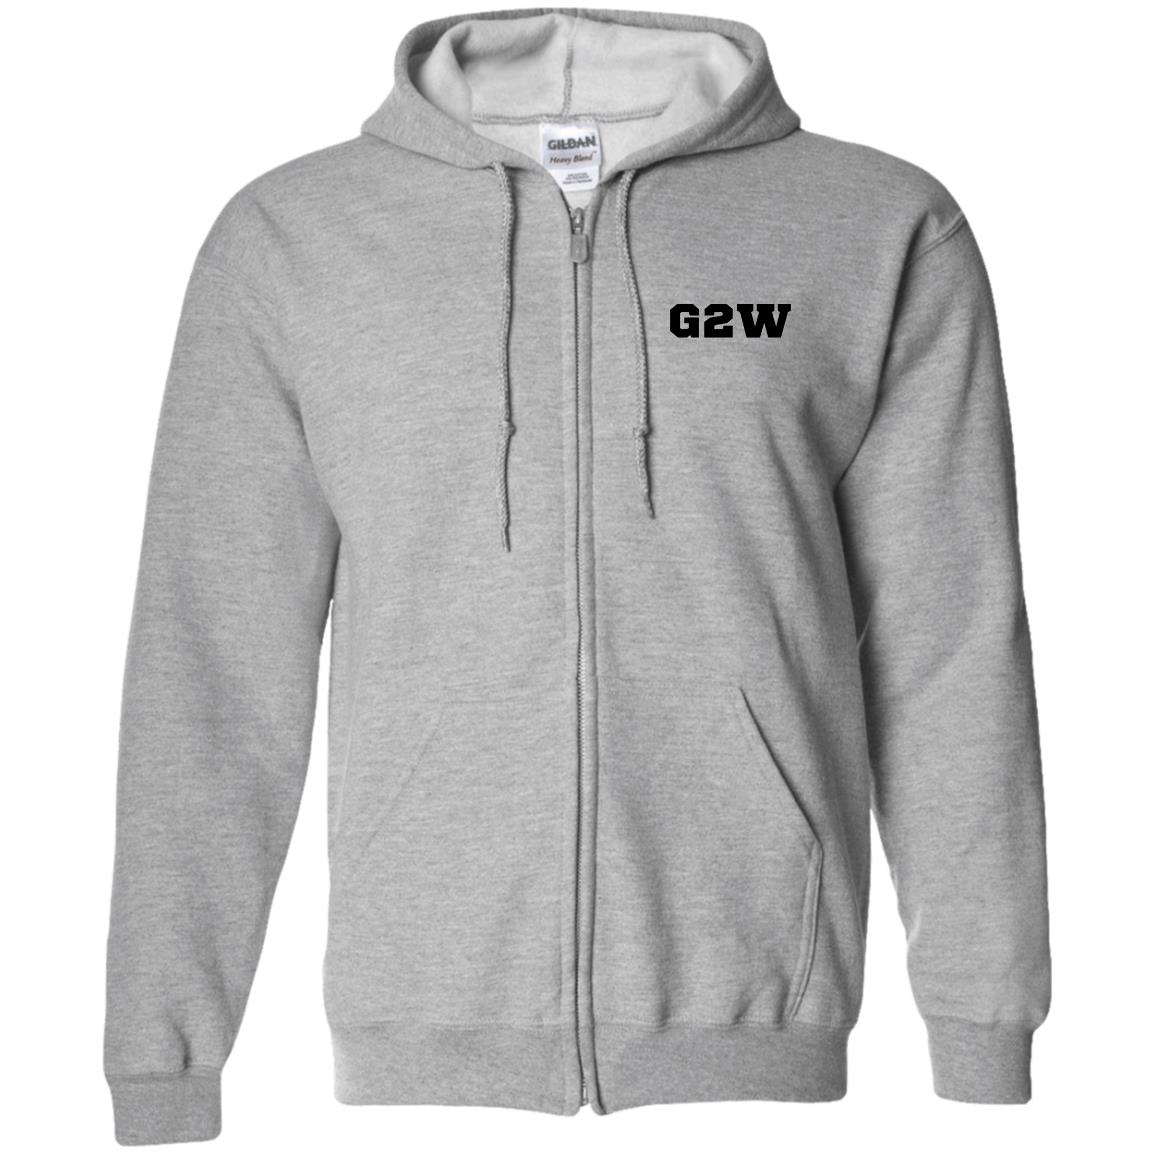 G2W Sports Gray Zip Up Hooded Sweatshirt